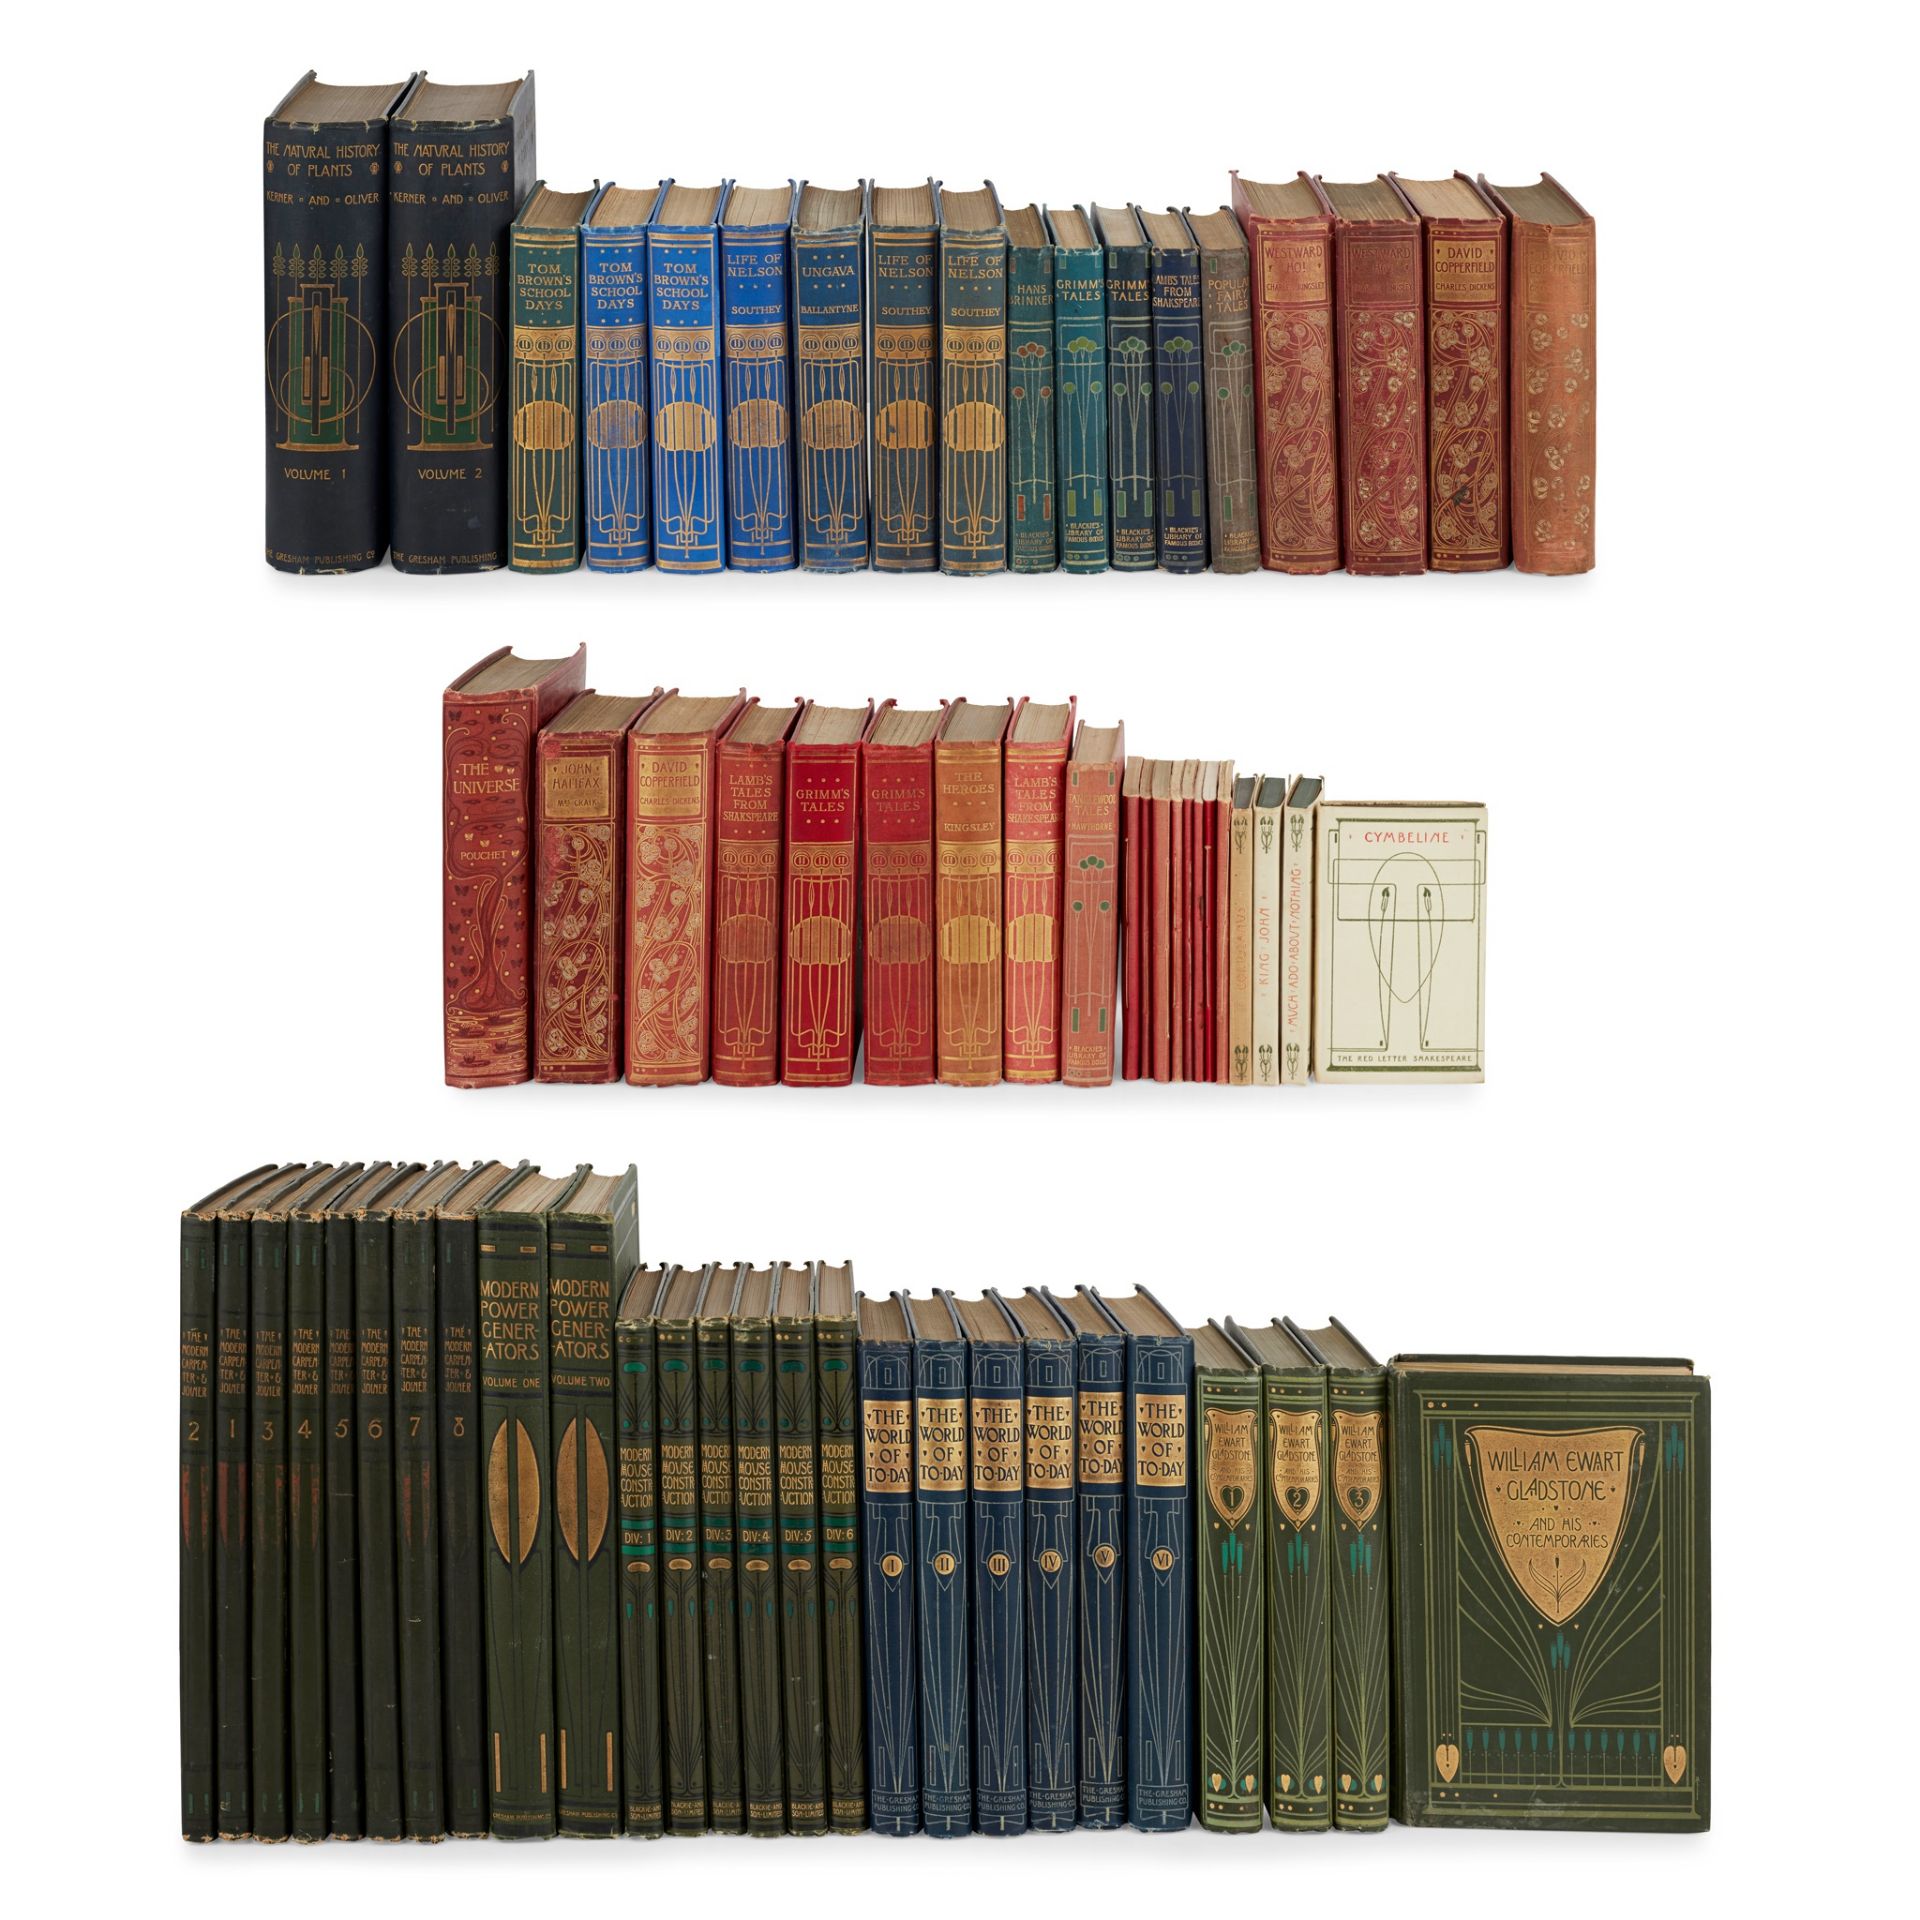 TALWIN MORRIS (1865-1911) LARGE COLLECTION OF GLASGOW SCHOOL ART NOUVEAU BOOK BINDINGS